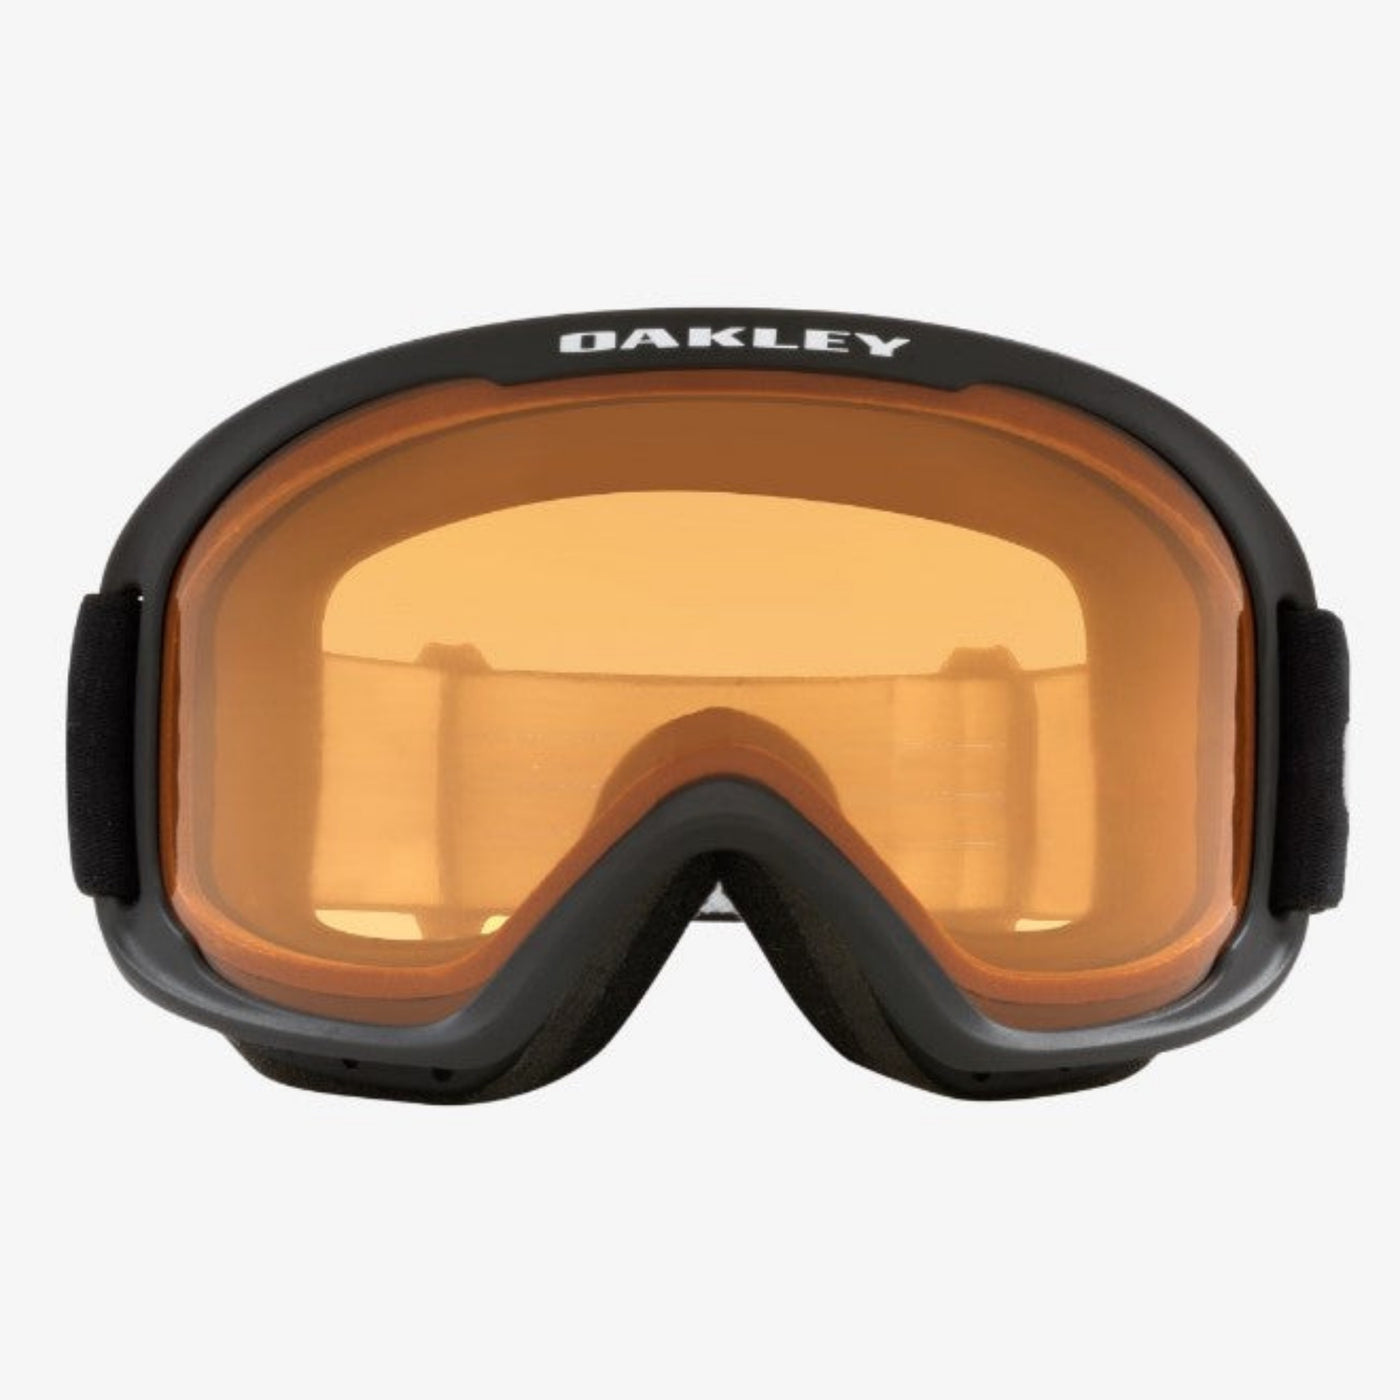 Oakley O-Frame 2.0 Pro - Black, Permission Lens (Medium)